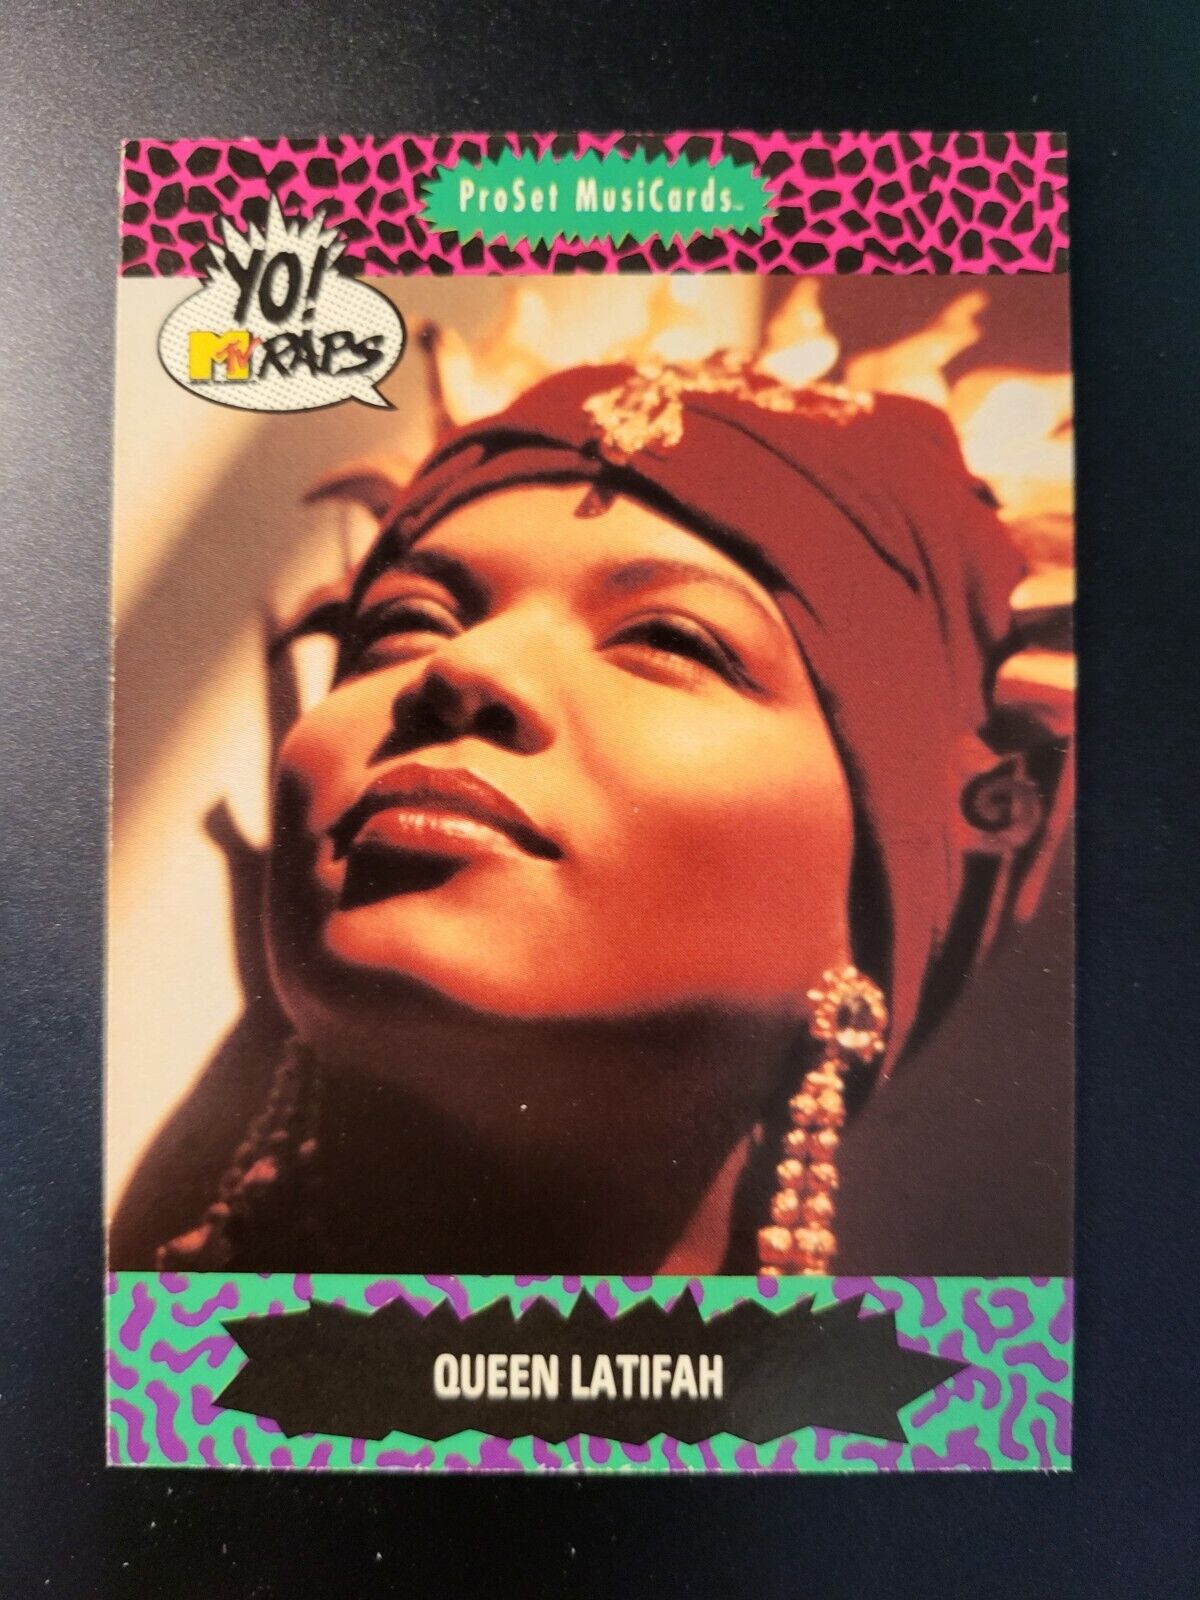 1991 ProSet MusiCards YO MTV Raps Queen Latifah RC card #139